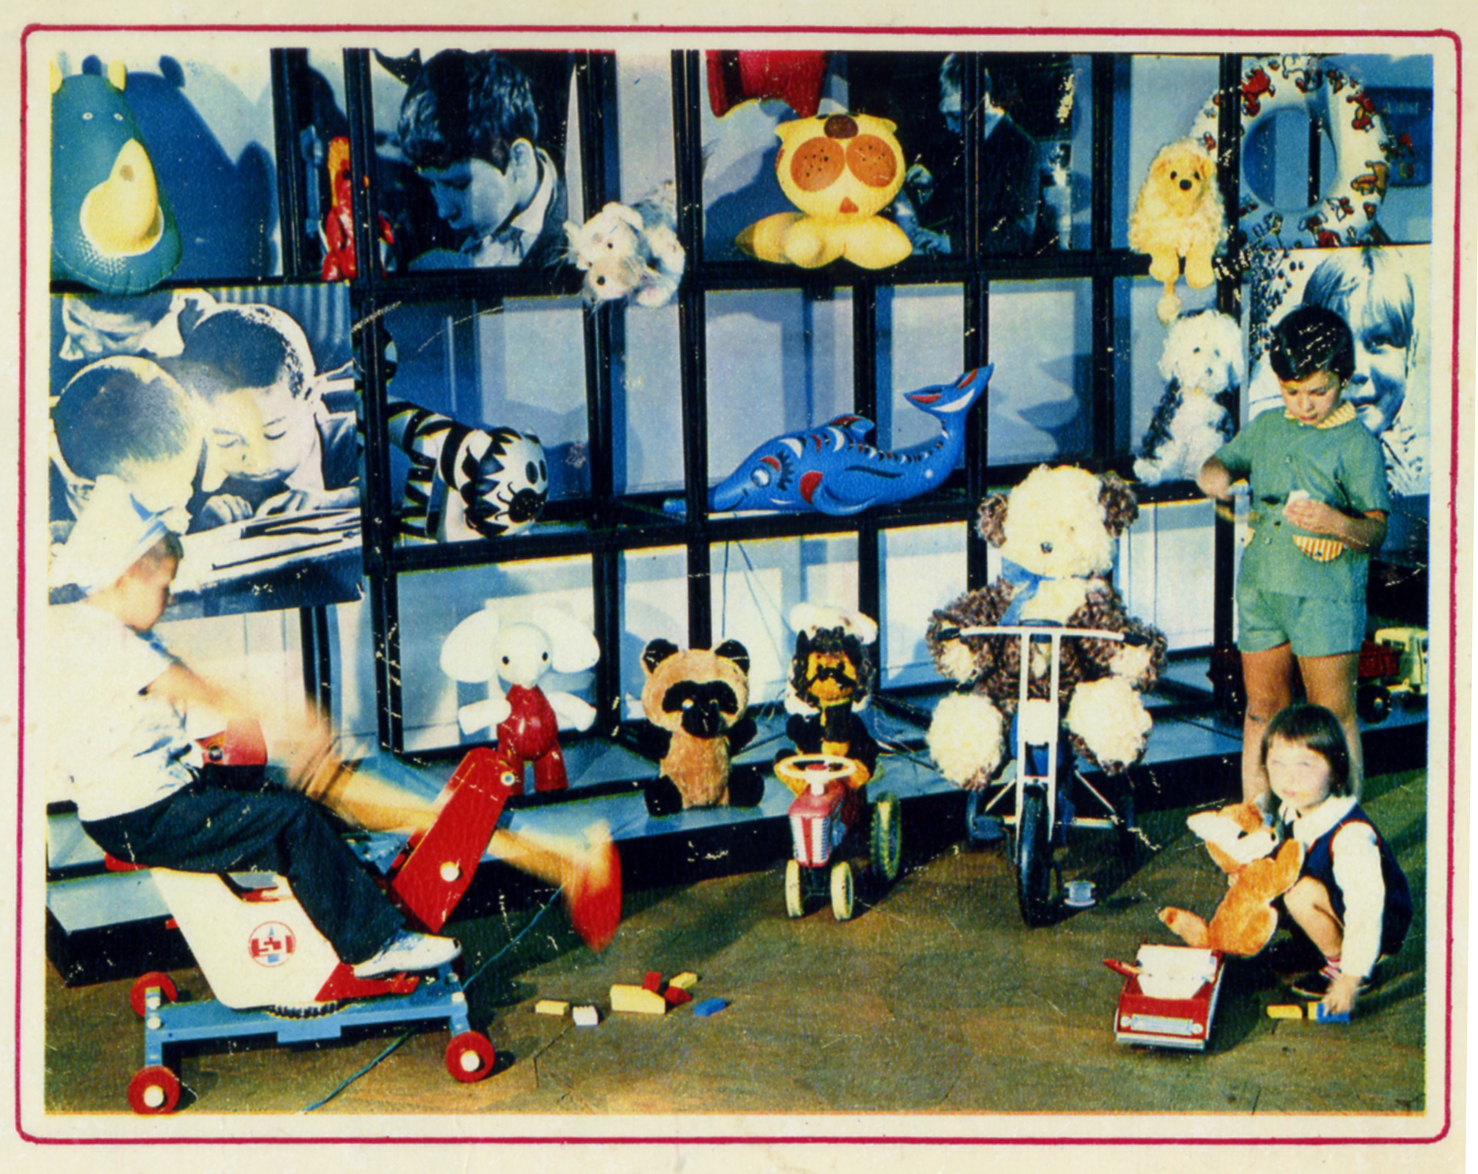 Открой картинки игрушек 1970 годов в Америке. Cheap made in China Toy 1970s.